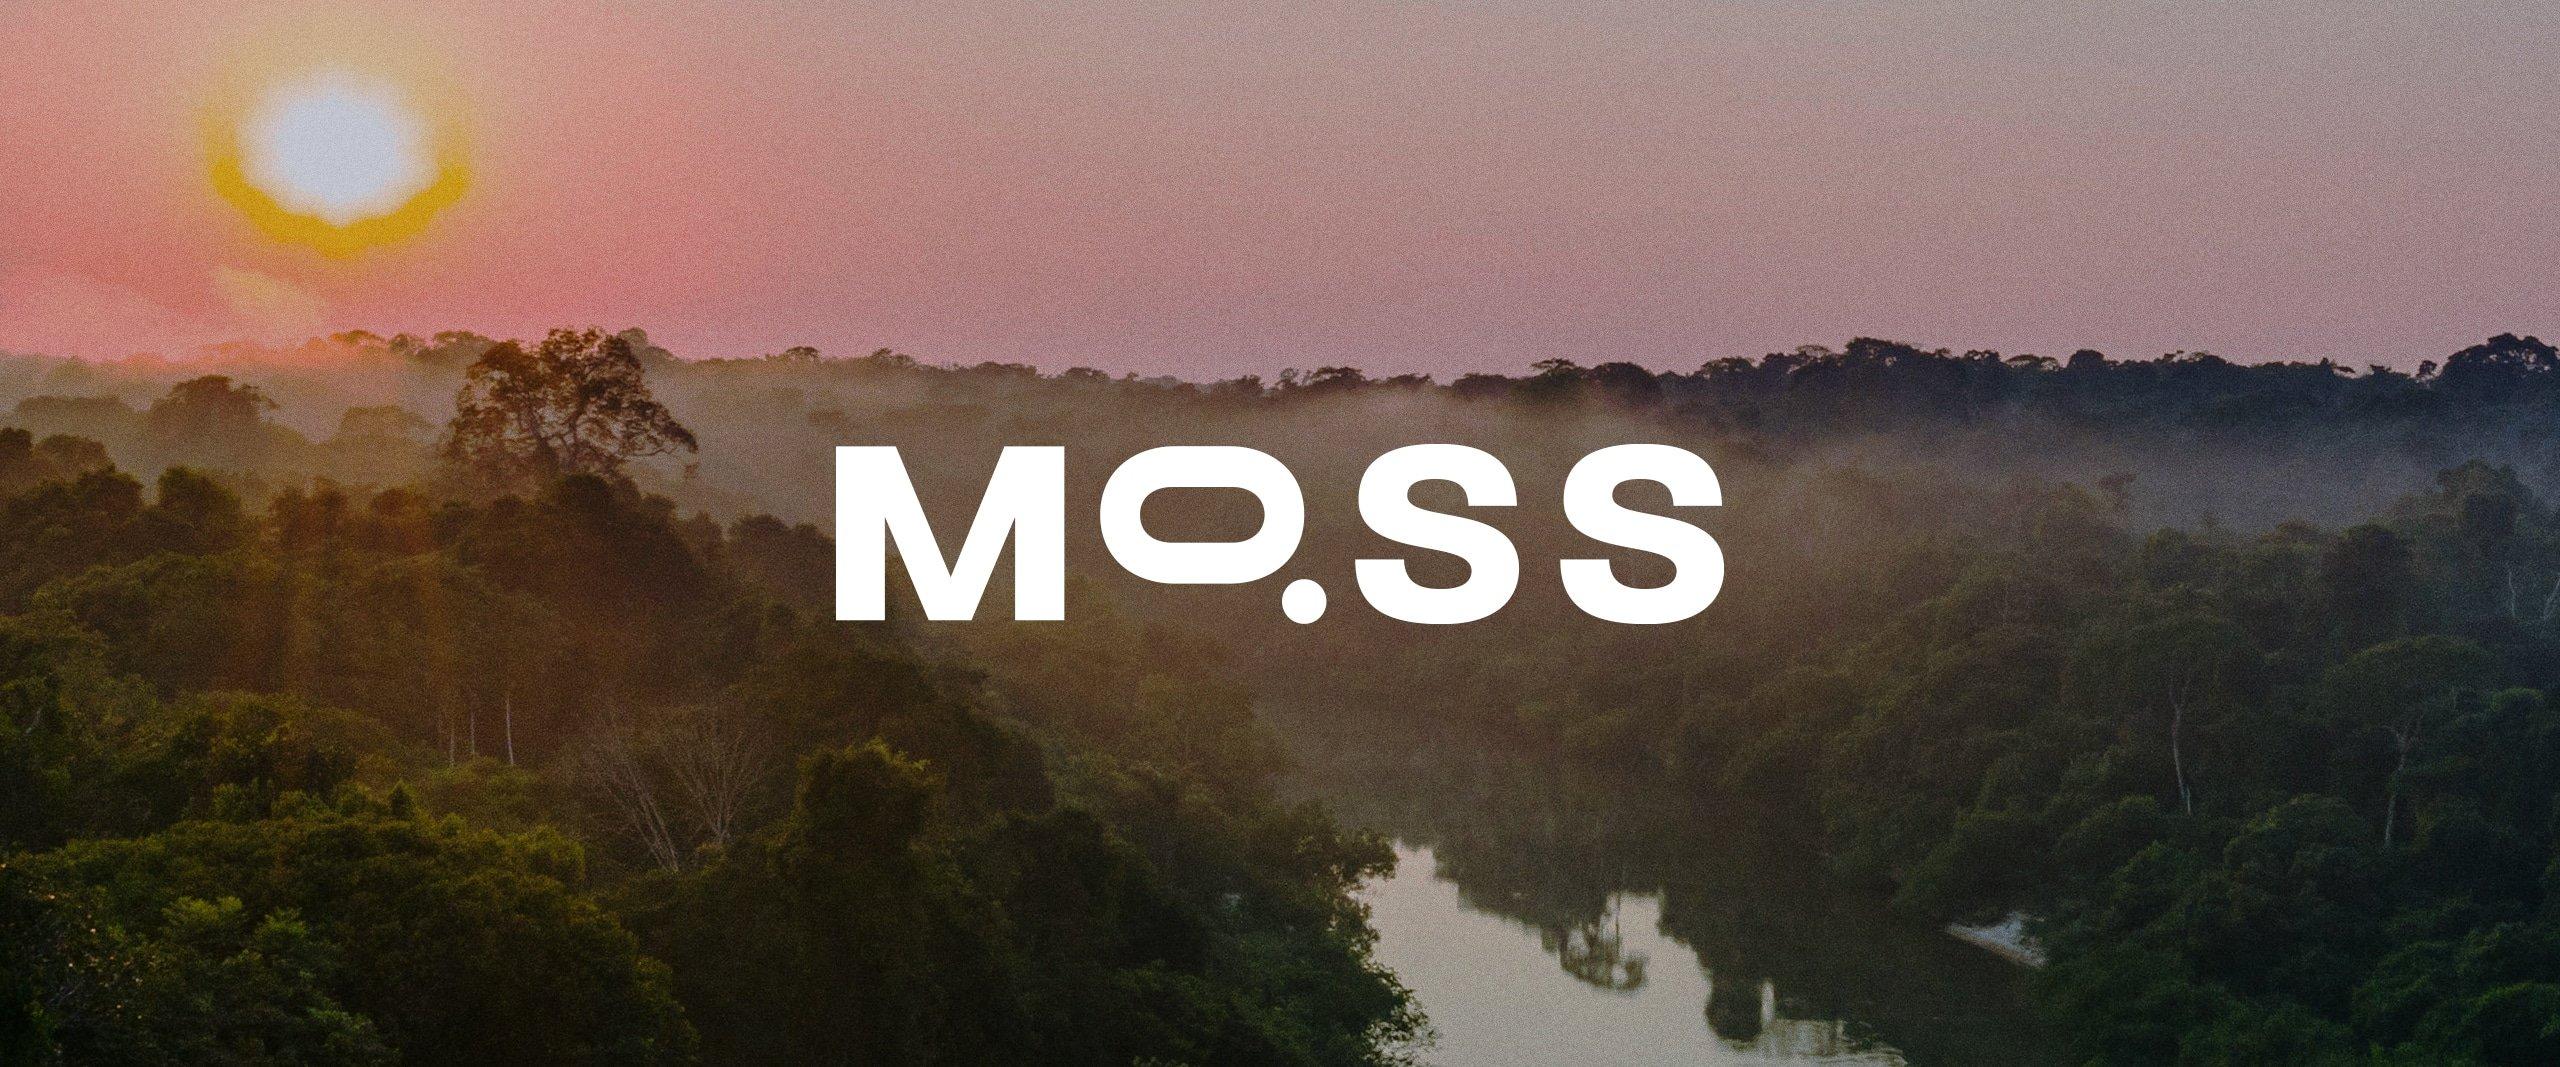 amazon with moss logo